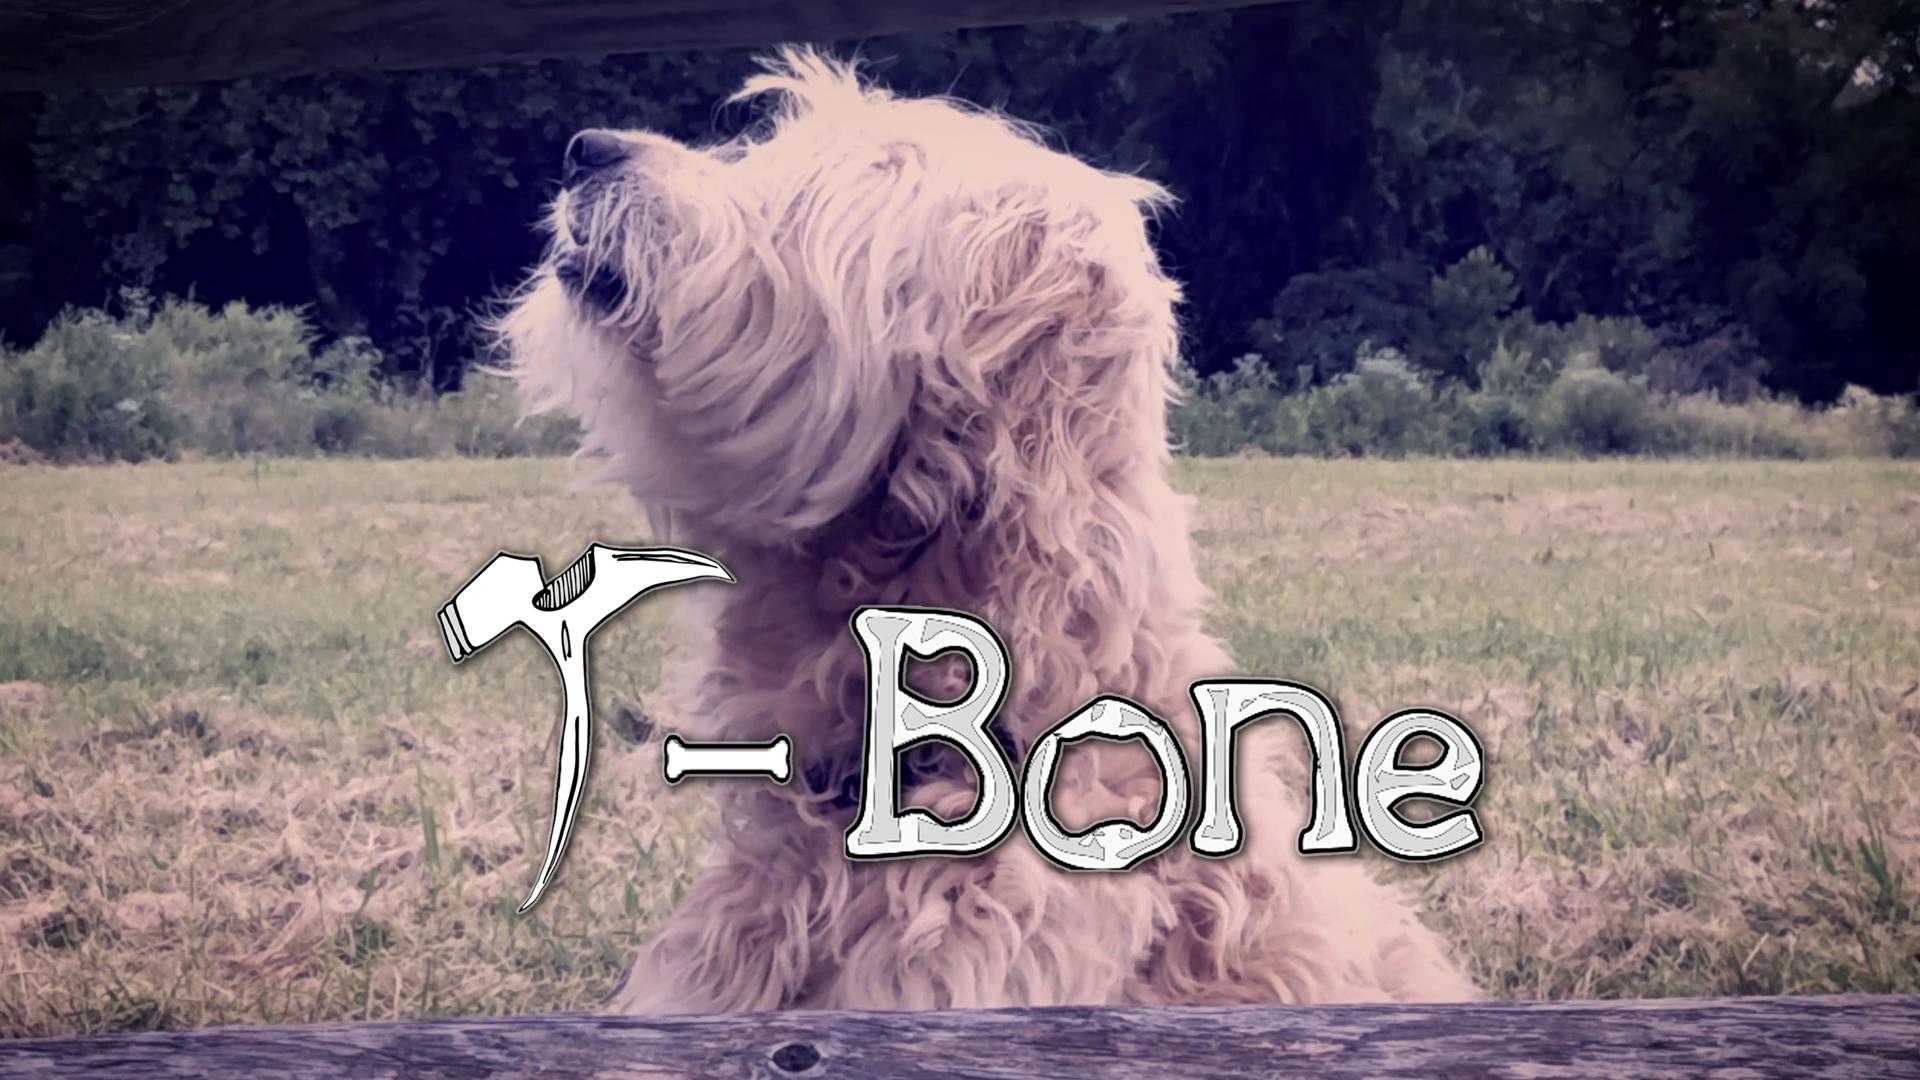 T-Bone